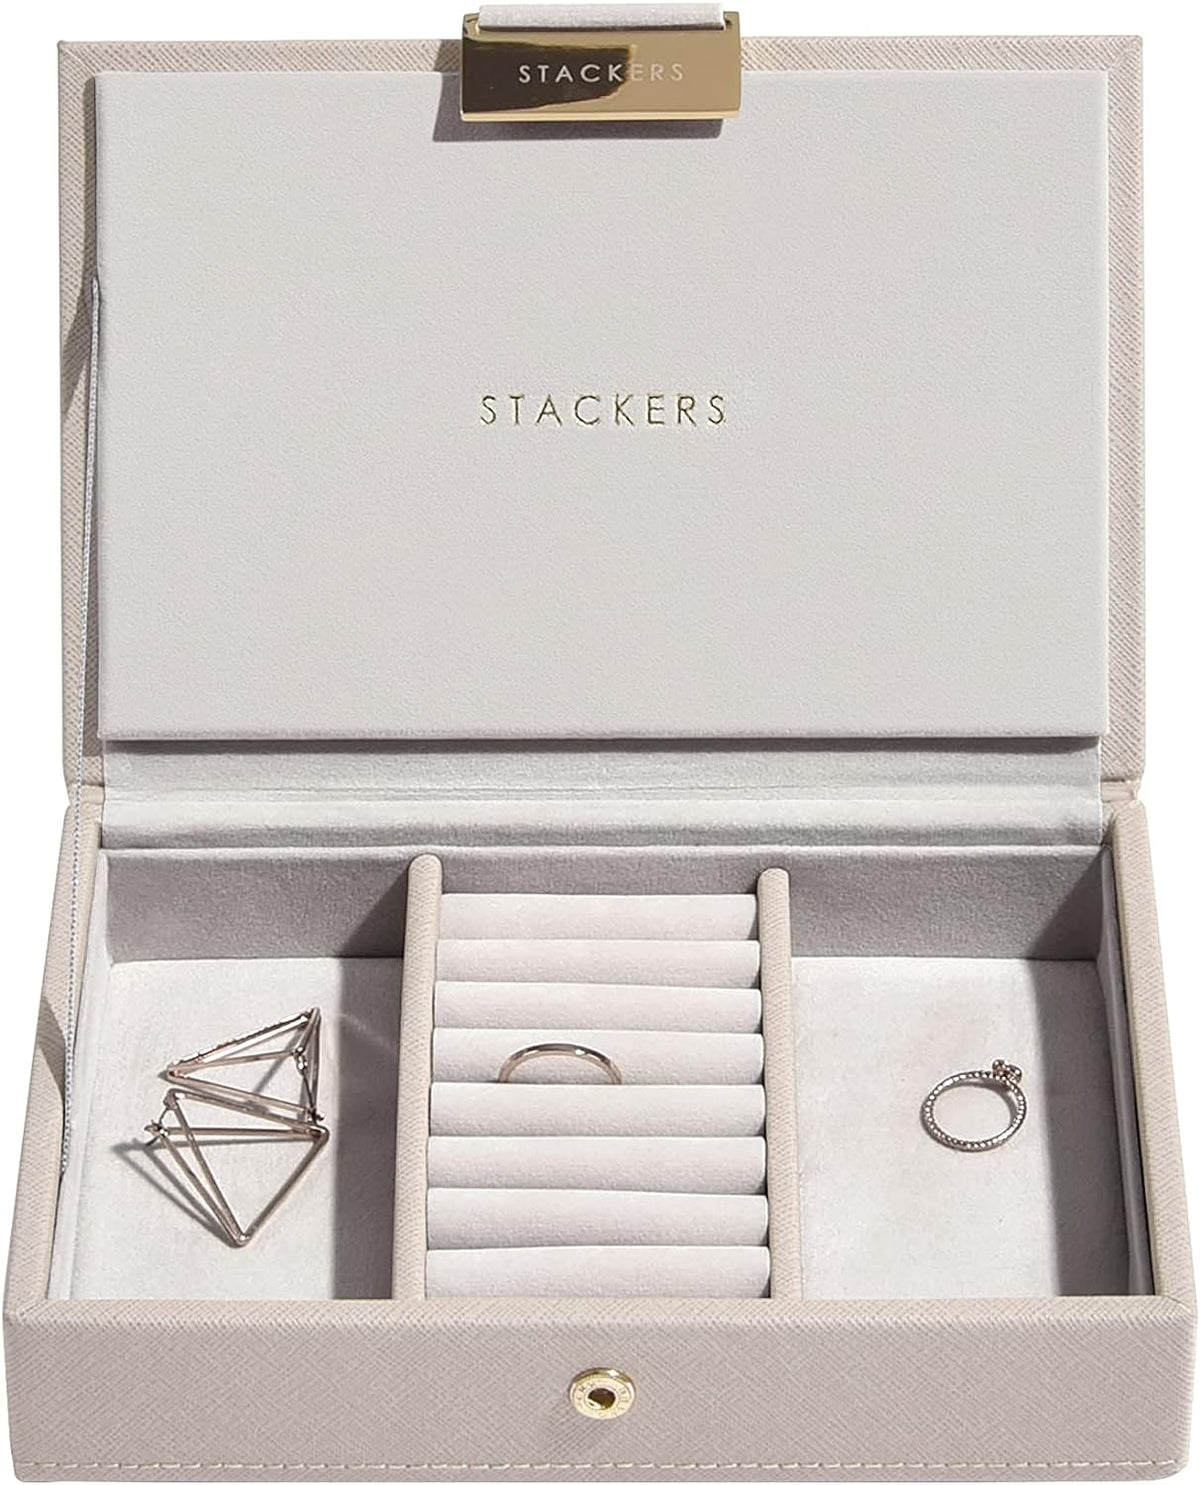 Stackers Taupe Mini Jewellery Box Lid